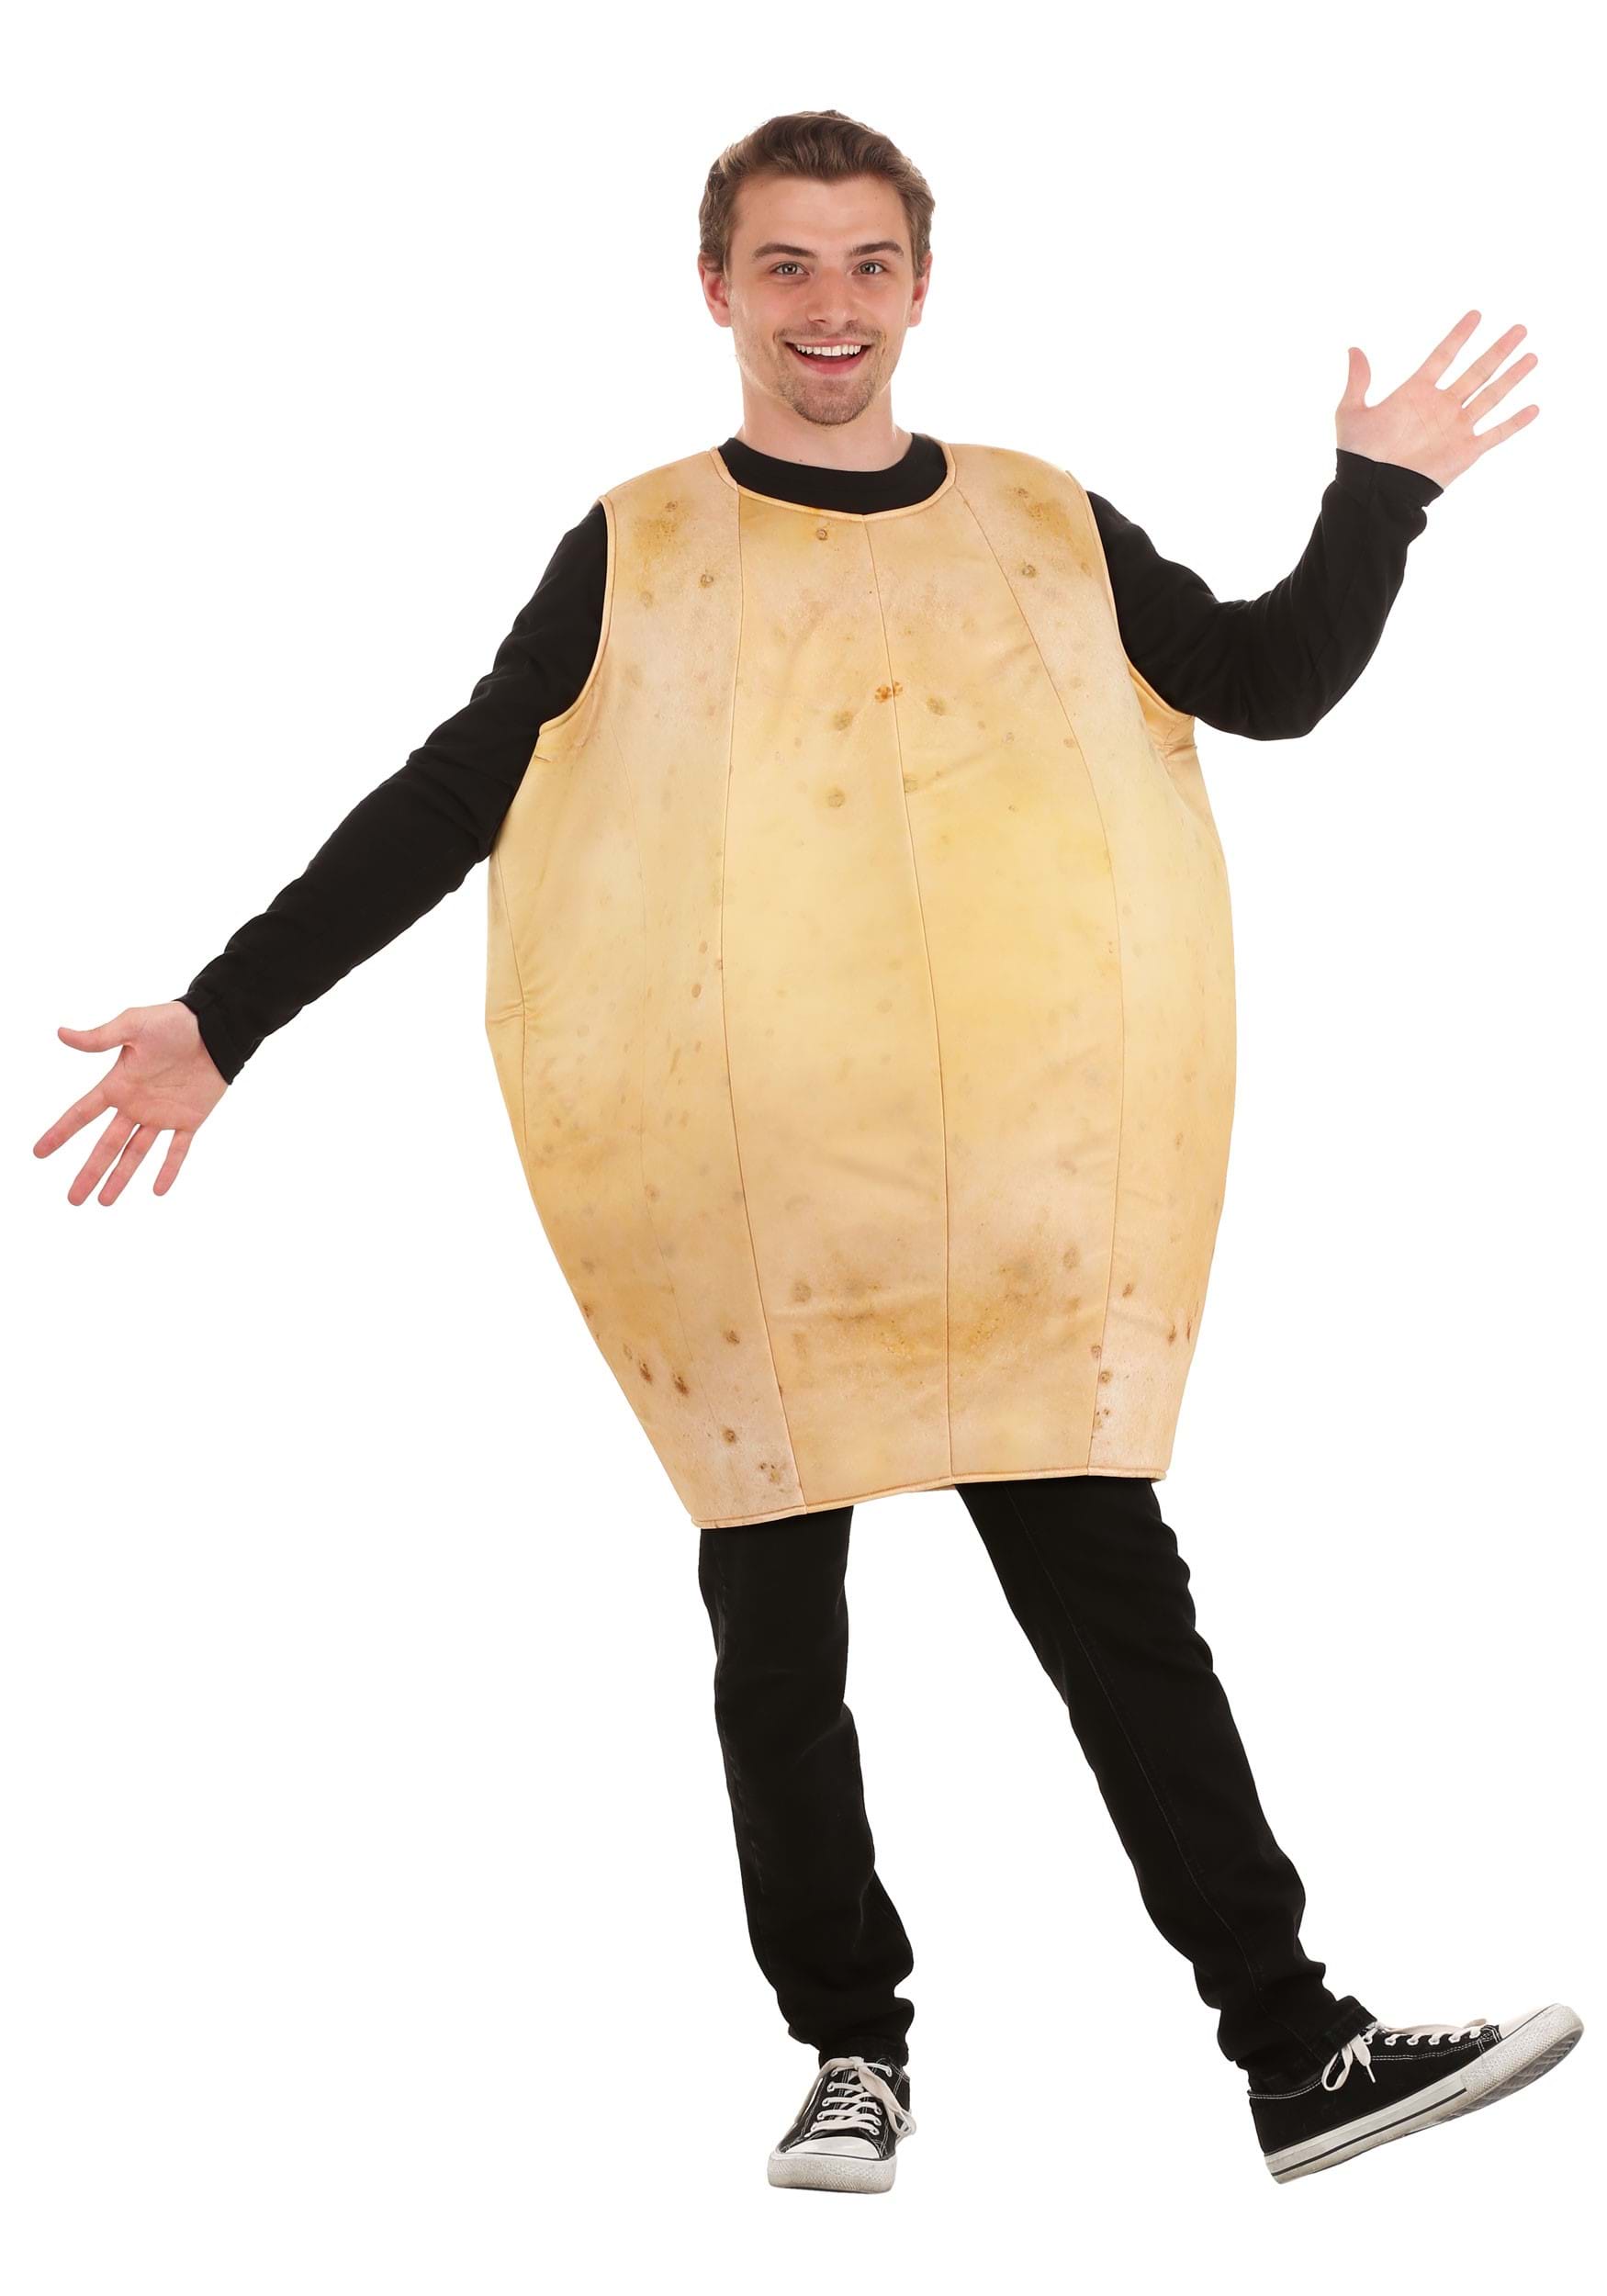 Potato costume